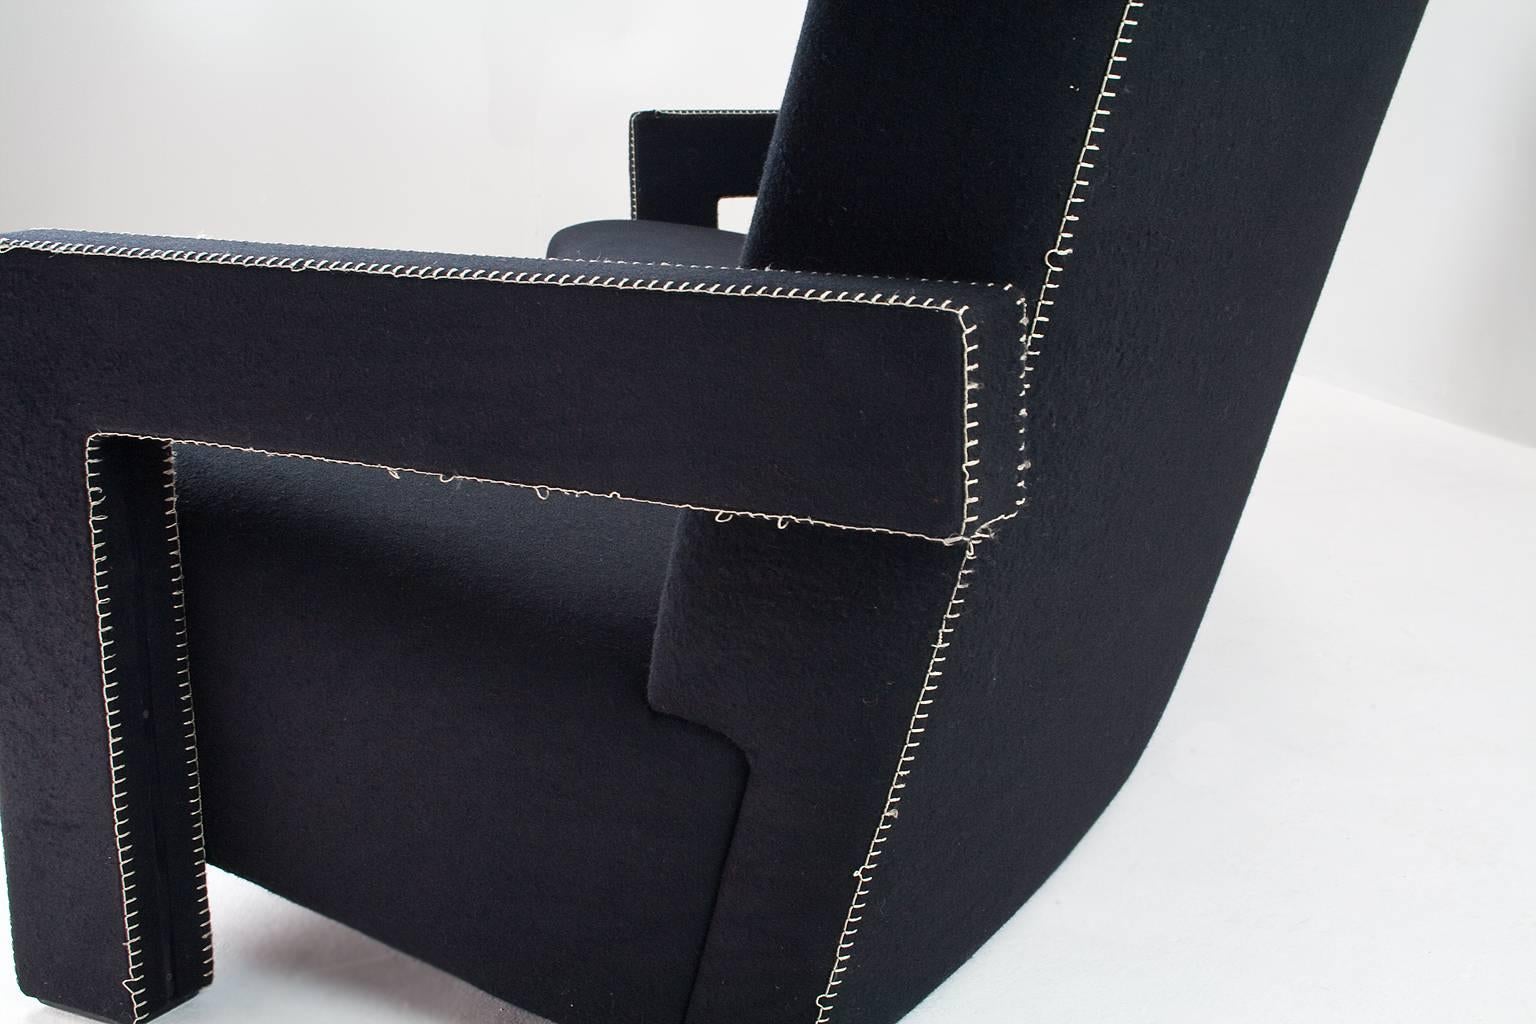 Fabric Festinated 'Utrecht' Sofa by Dutch Architect Gerrit Rietveld for Cassina